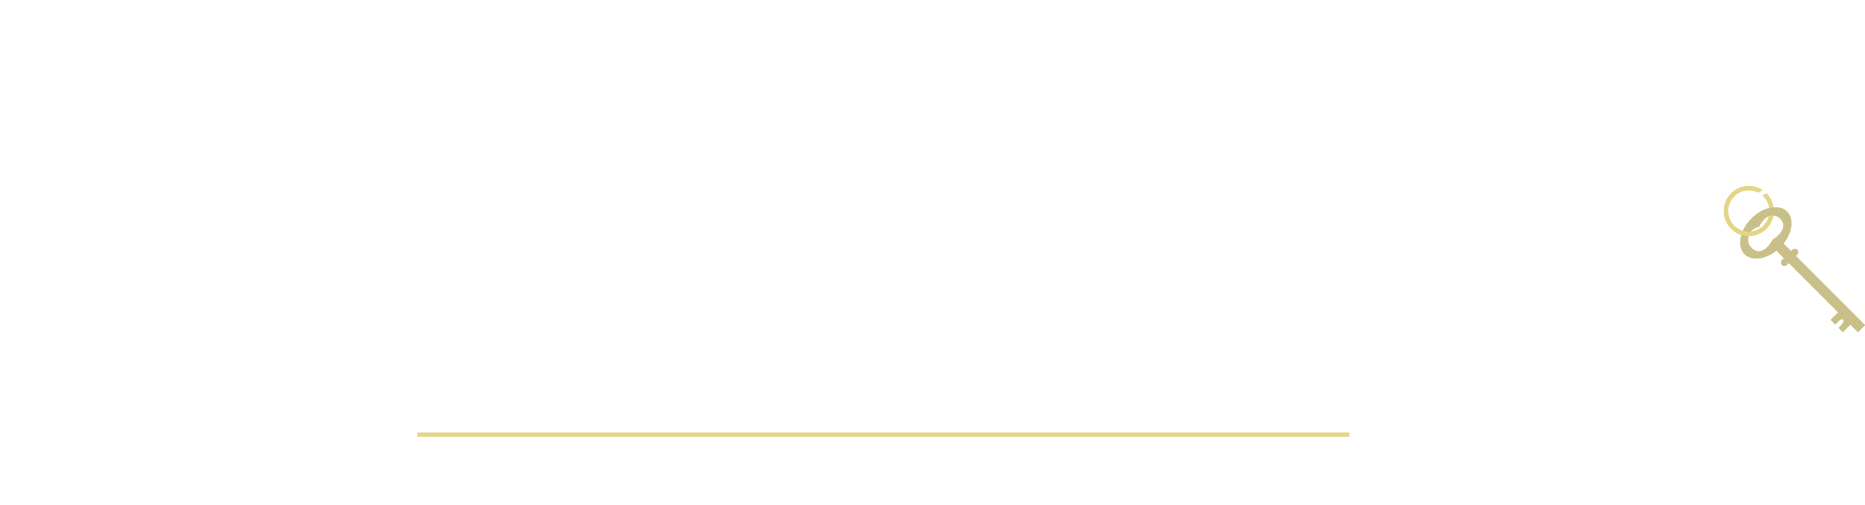 BW Real Estate Logo White